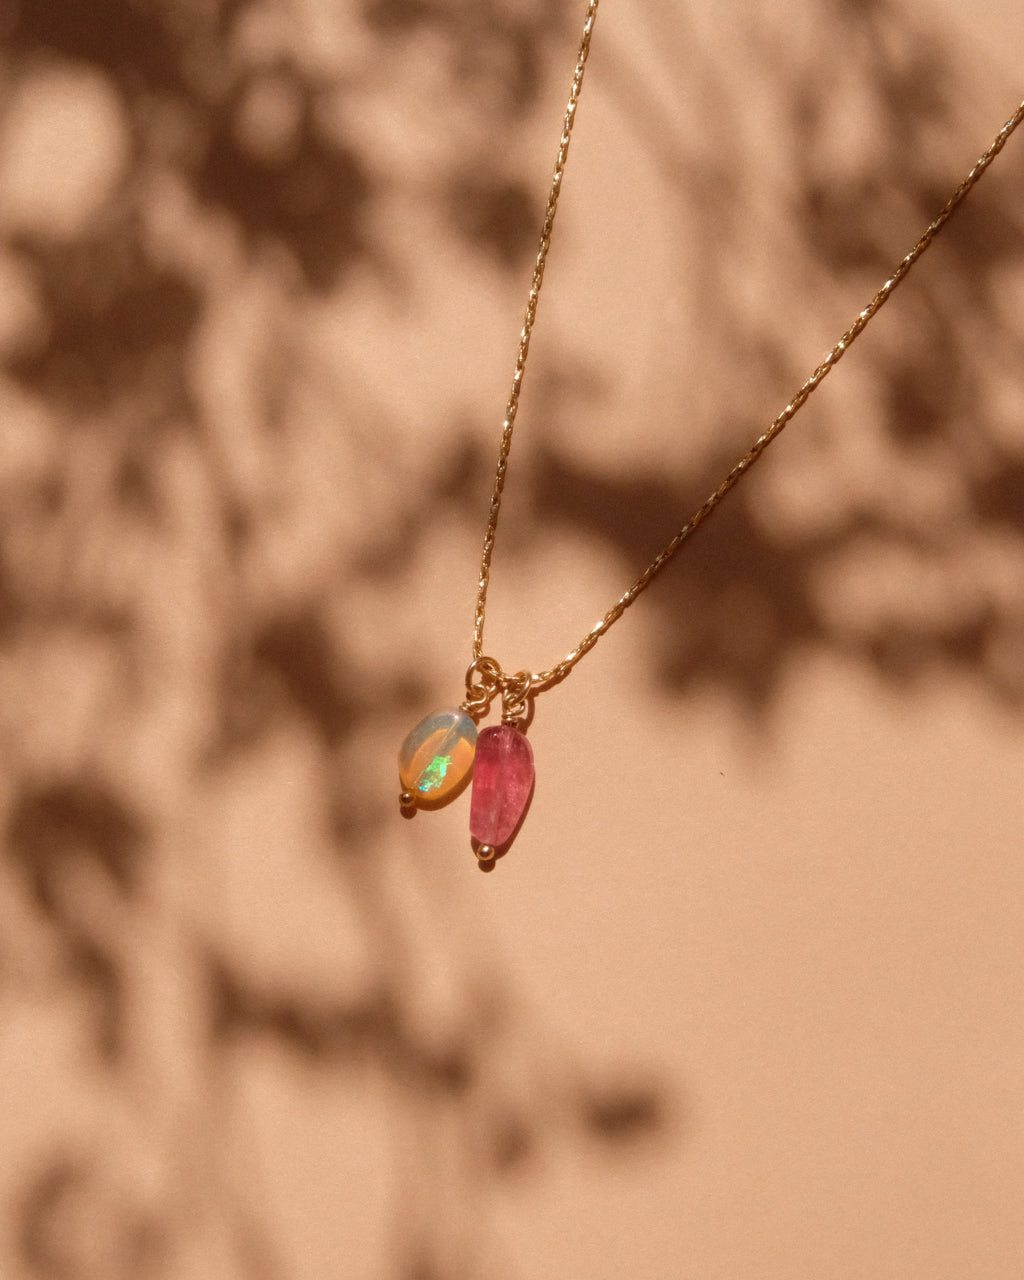 Shop Pink Tourmaline and Australian Opal Pendant for women | Gehna | Opal  pendants, Australian opal pendant, Pink tourmaline